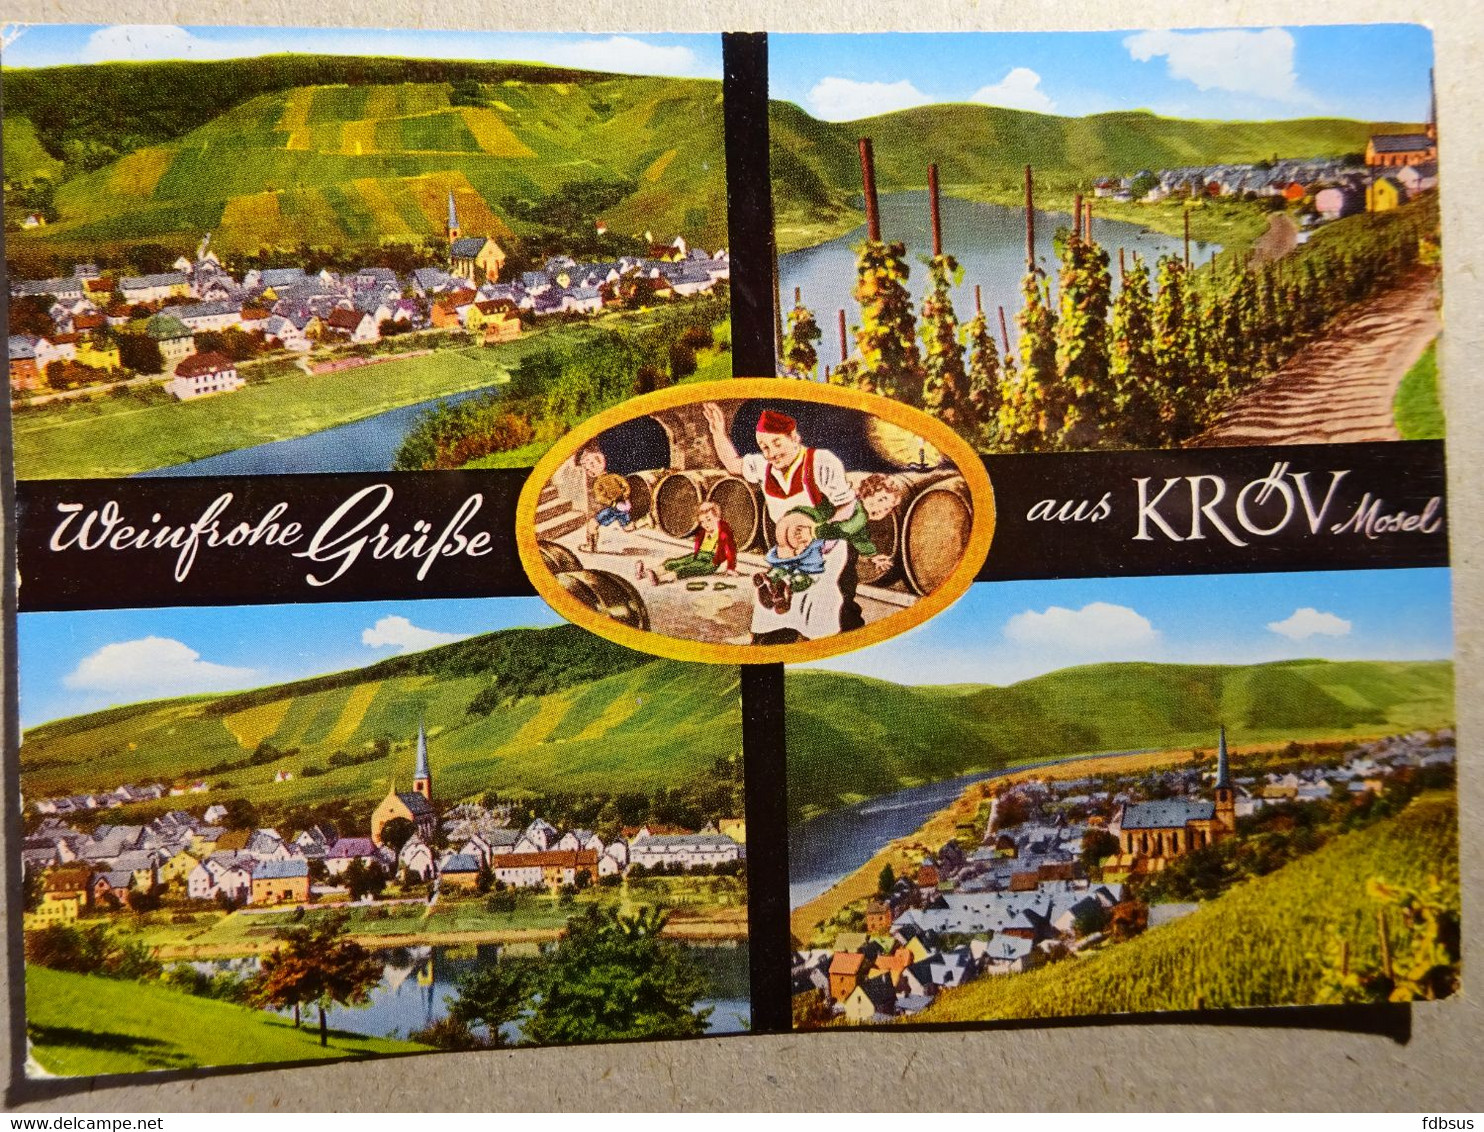 1974 Krov / Mosel - Weinfrohe Grusse - Wein Krover Nacktarsch - 4 Photo's On Card - Ed. R. Cornely - See Scans For Stamp - Kroev